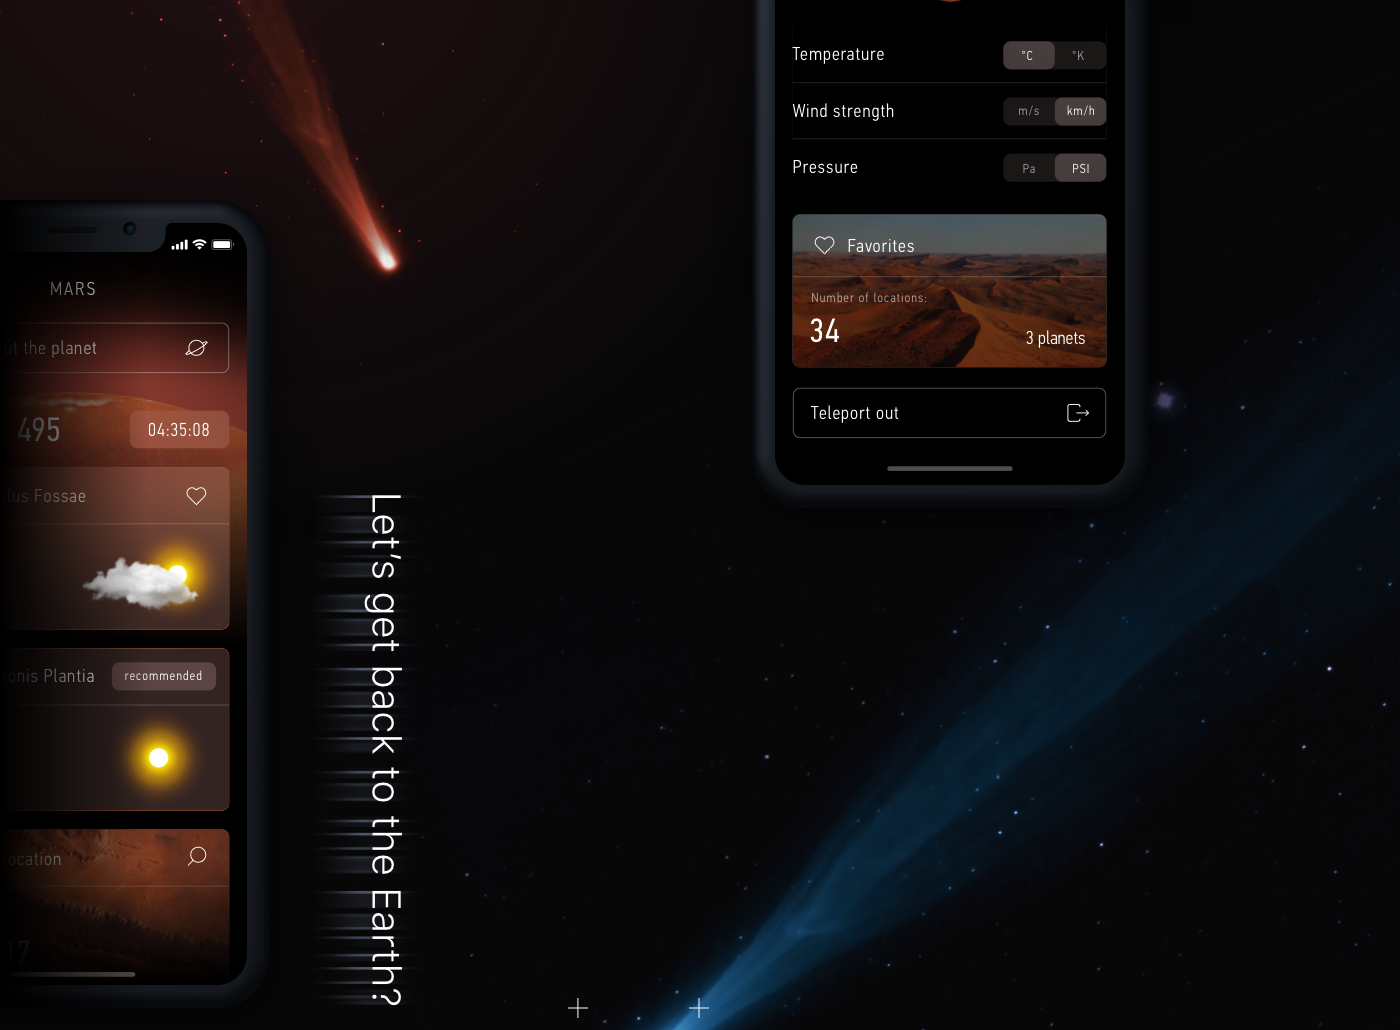 ux mobile UI animation  Interface fantasy movie concept app Mobile app